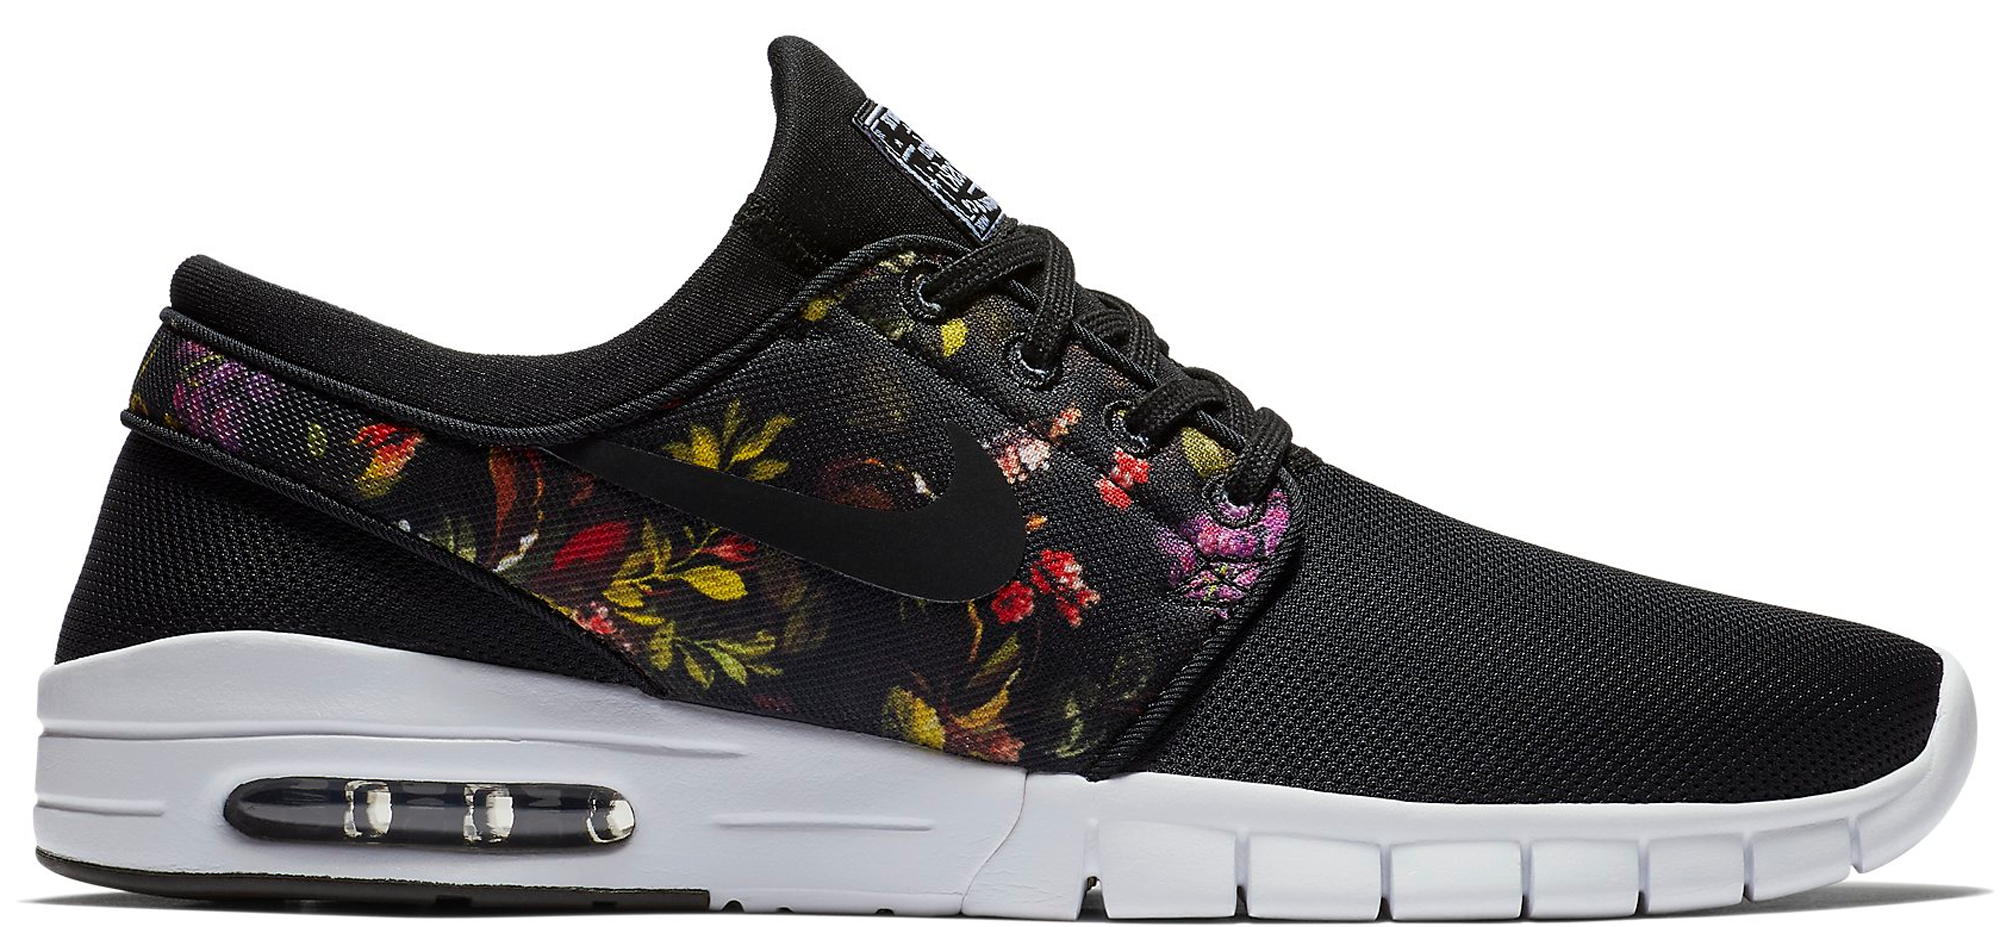 nike sb janoski air max black & floral shoes